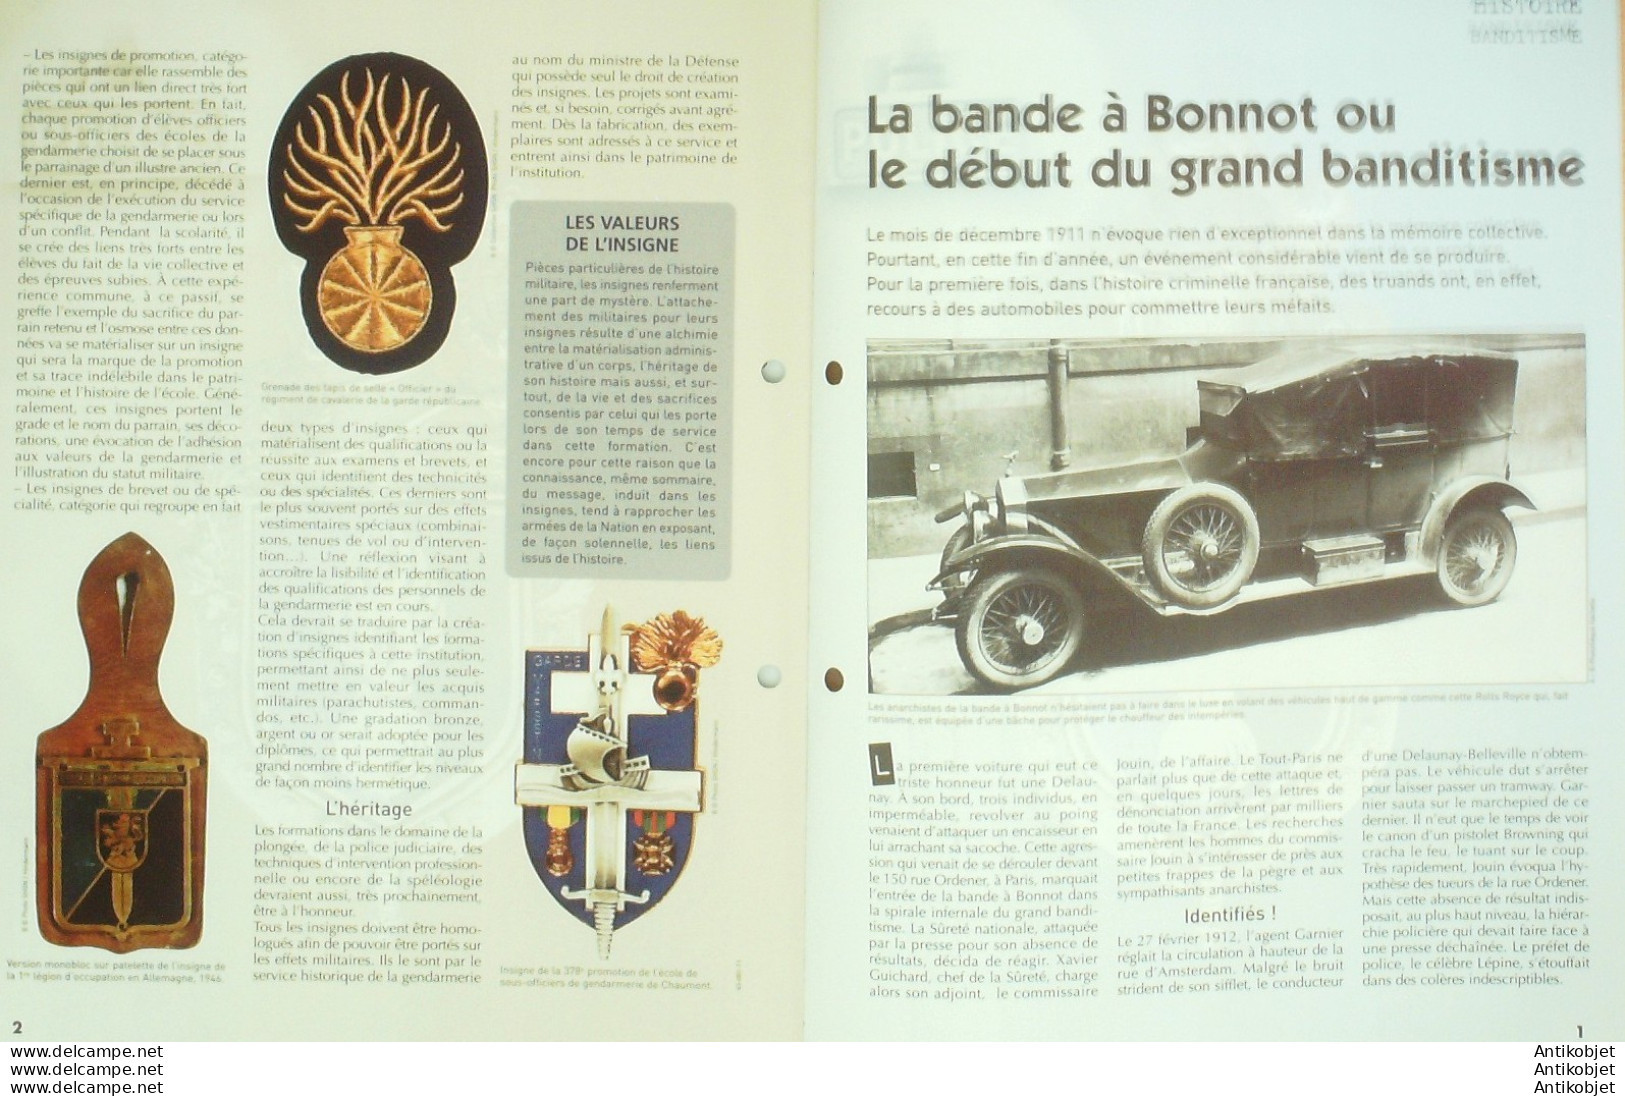 Citroen Type HY Police Gendarmerie Méhari édition Hachette - Historia